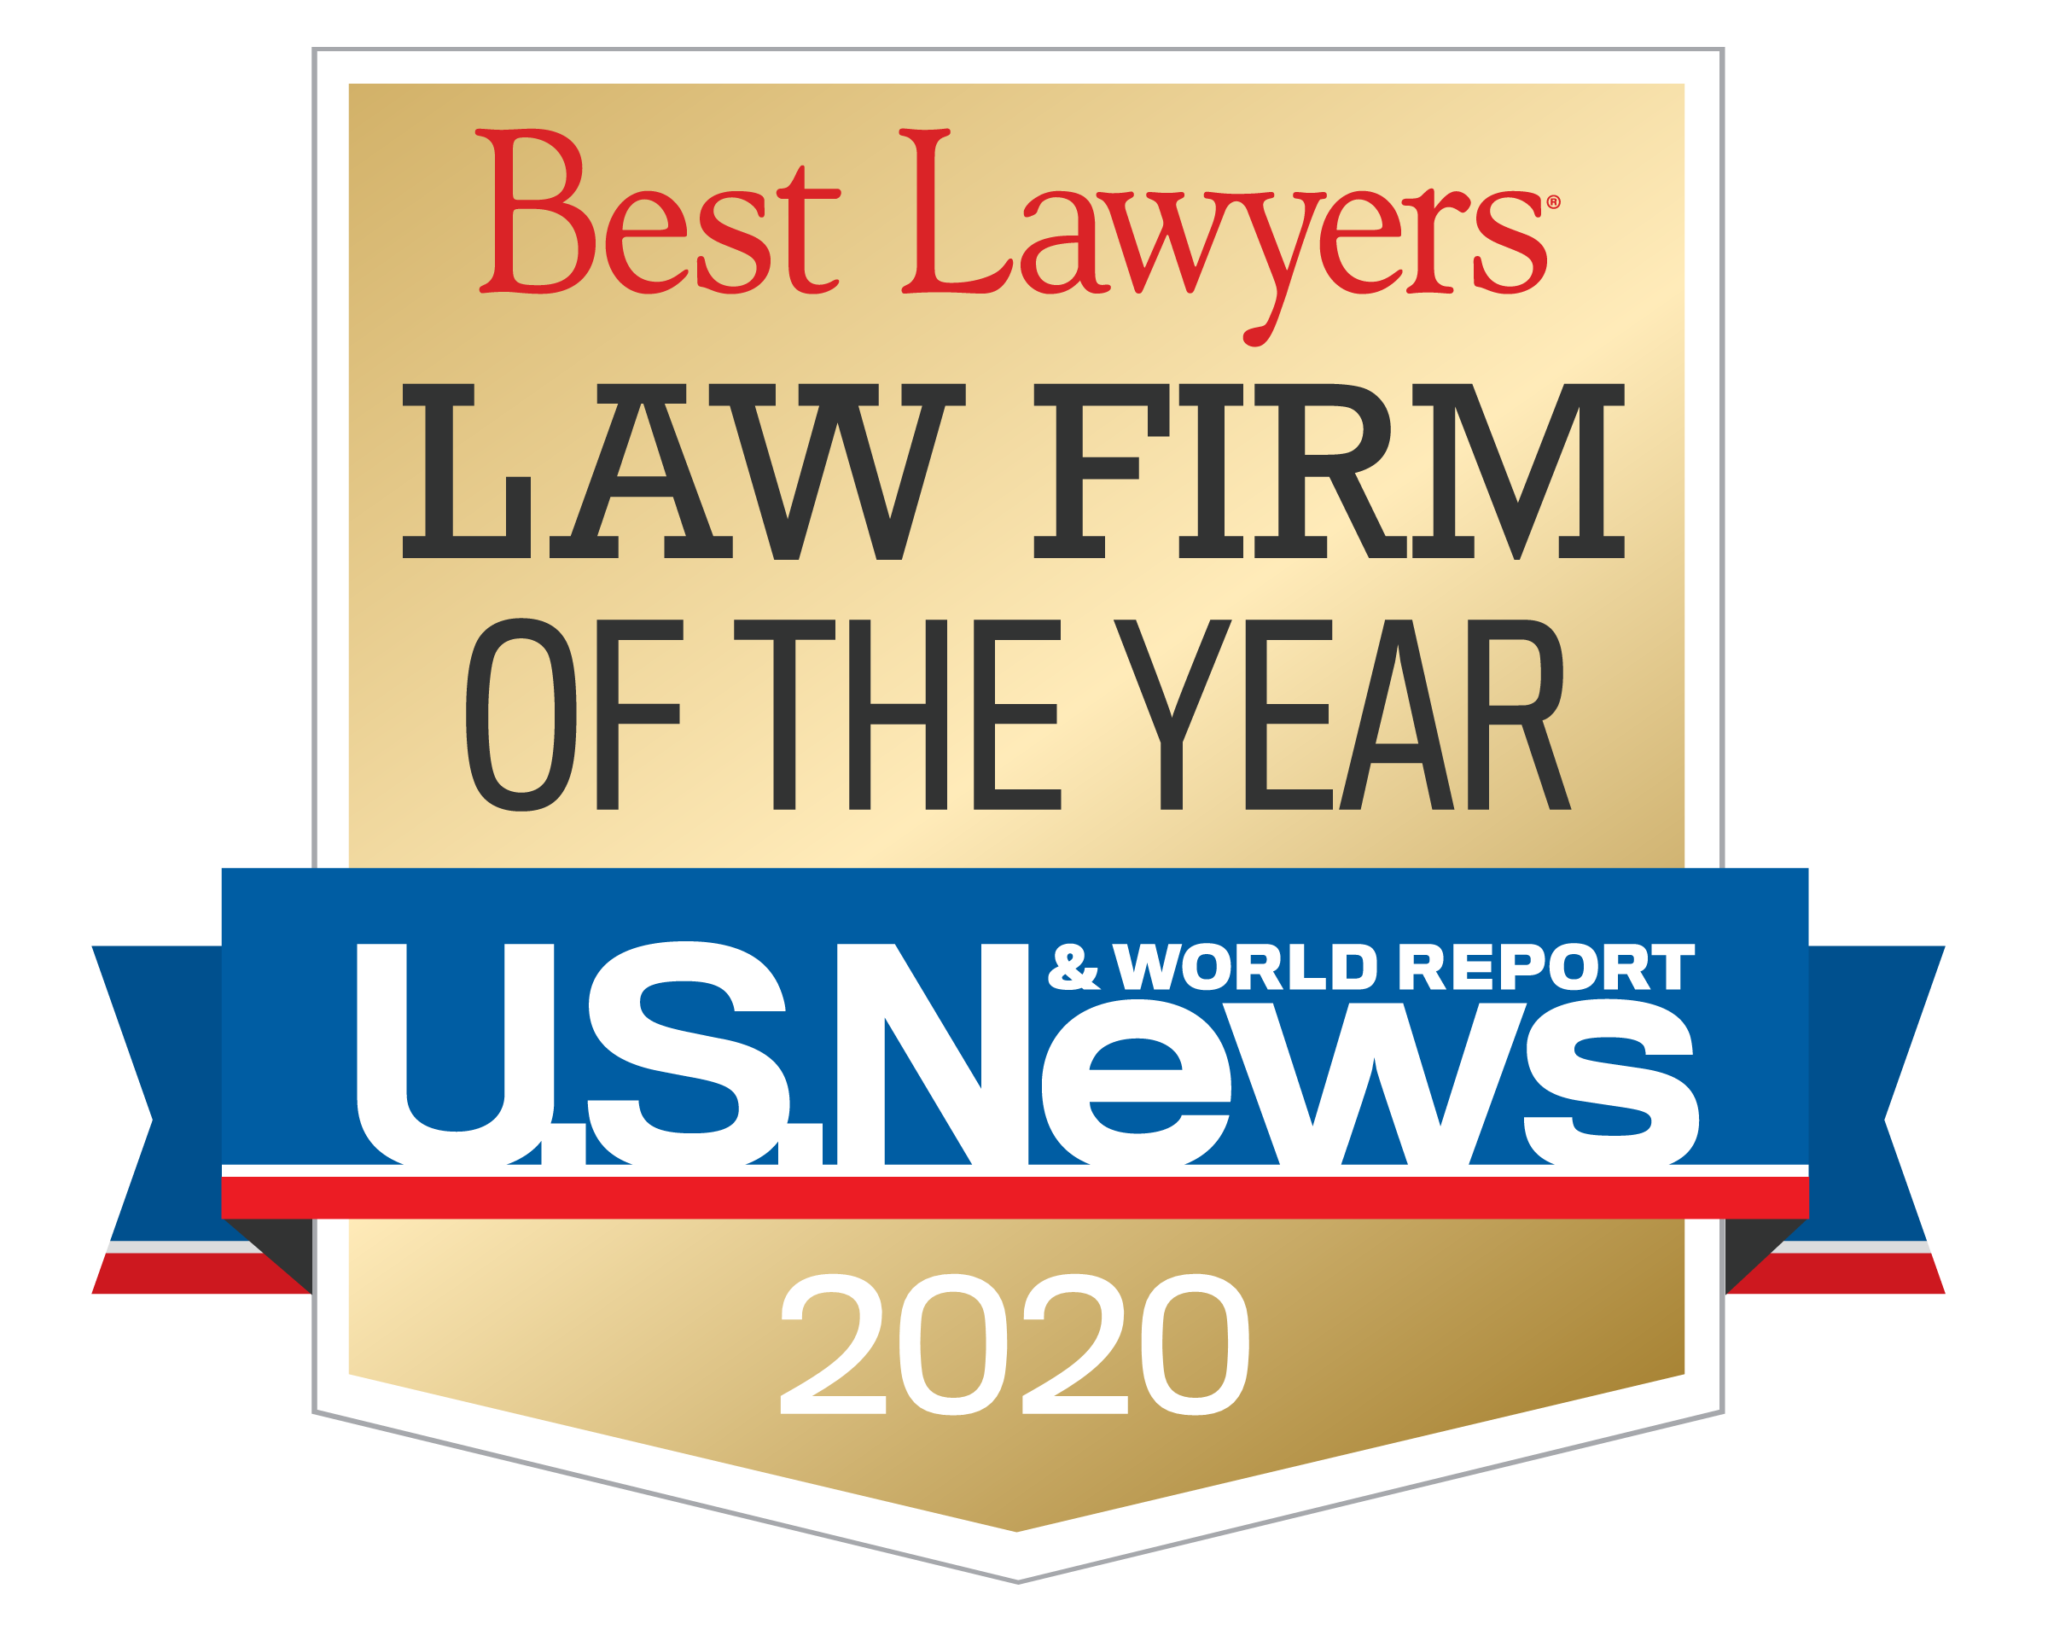 Best Lawyers - Best Law Firms - U.S. News 2020